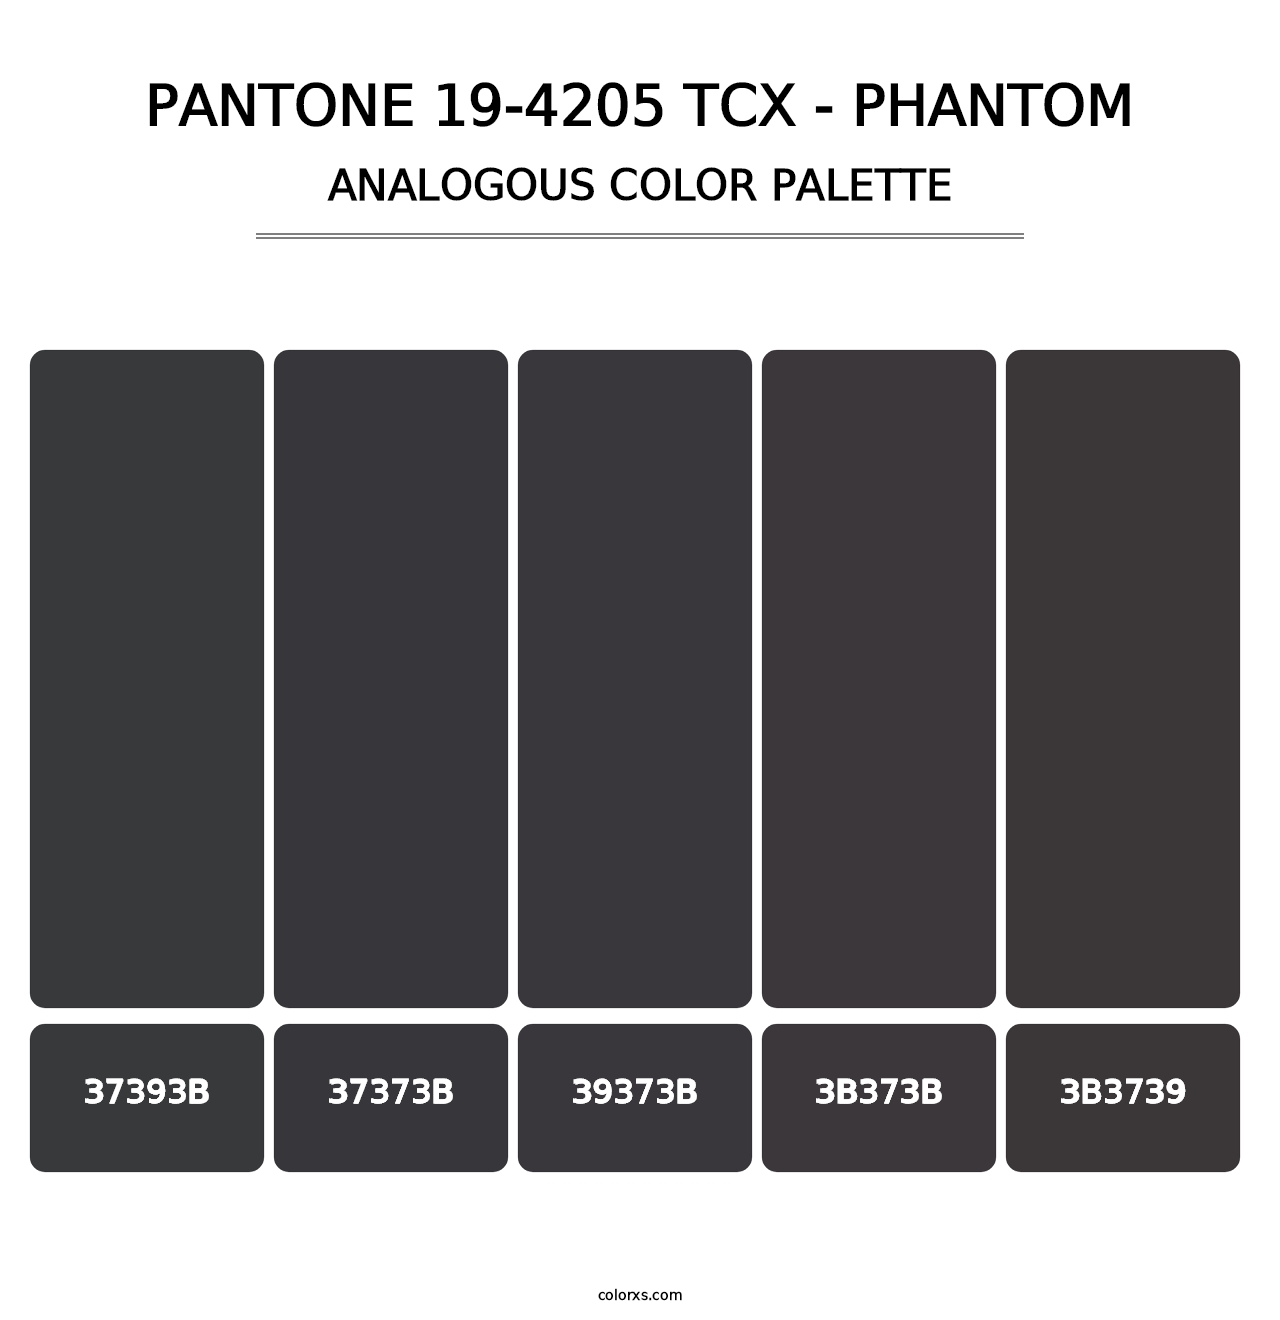 PANTONE 19-4205 TCX - Phantom - Analogous Color Palette